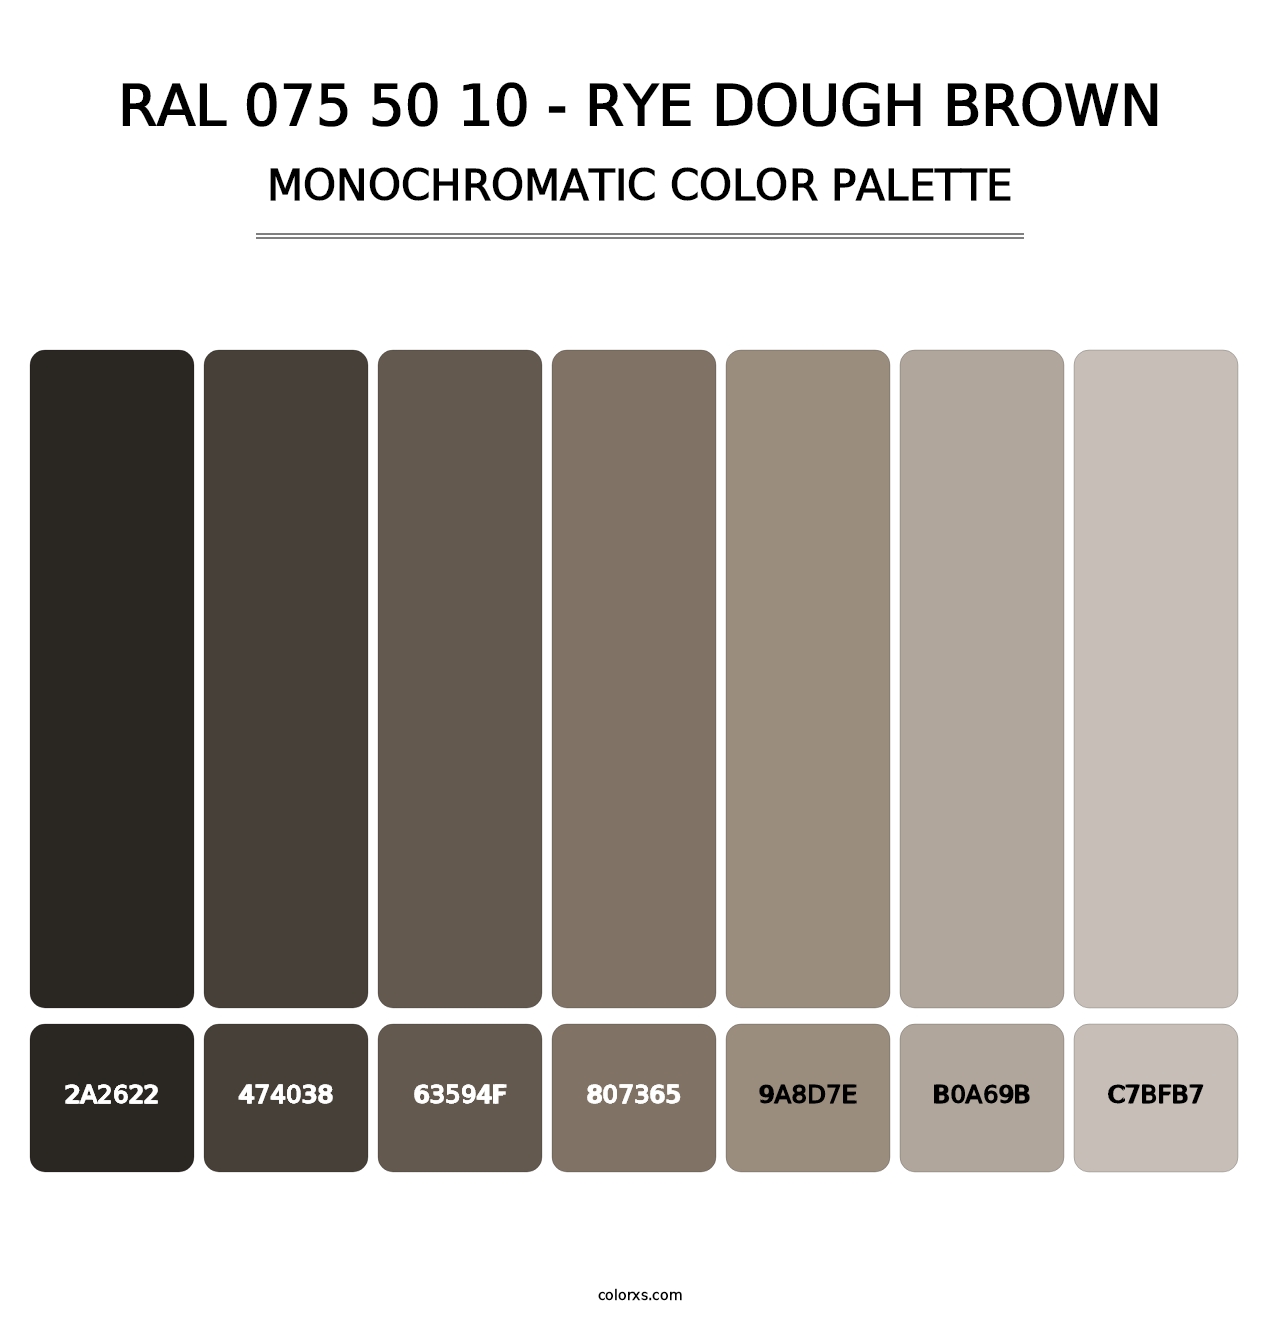 RAL 075 50 10 - Rye Dough Brown - Monochromatic Color Palette